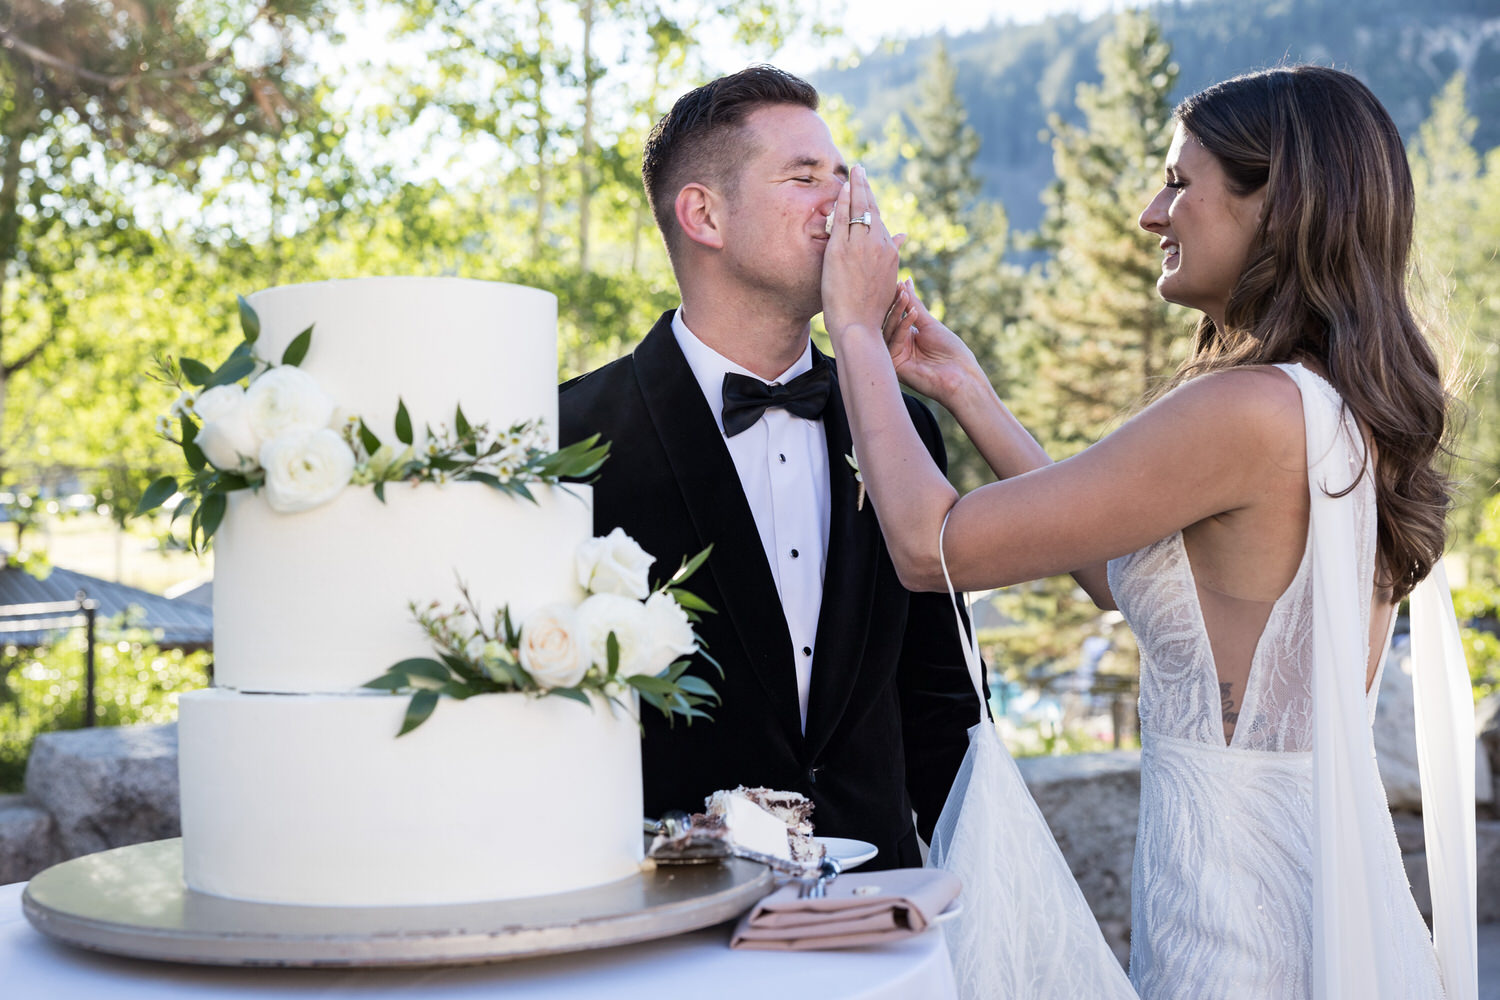 Smashing the wedding cake on the groom's face.